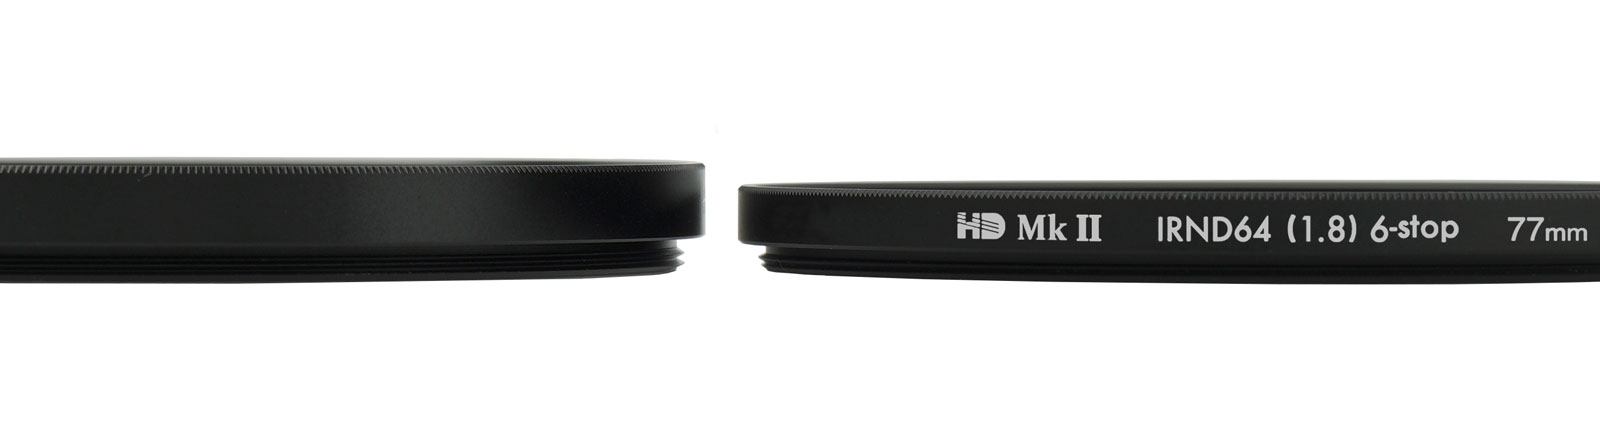 HOYA HD Mk II IRND1000 (3.0) filtre de densité neutre